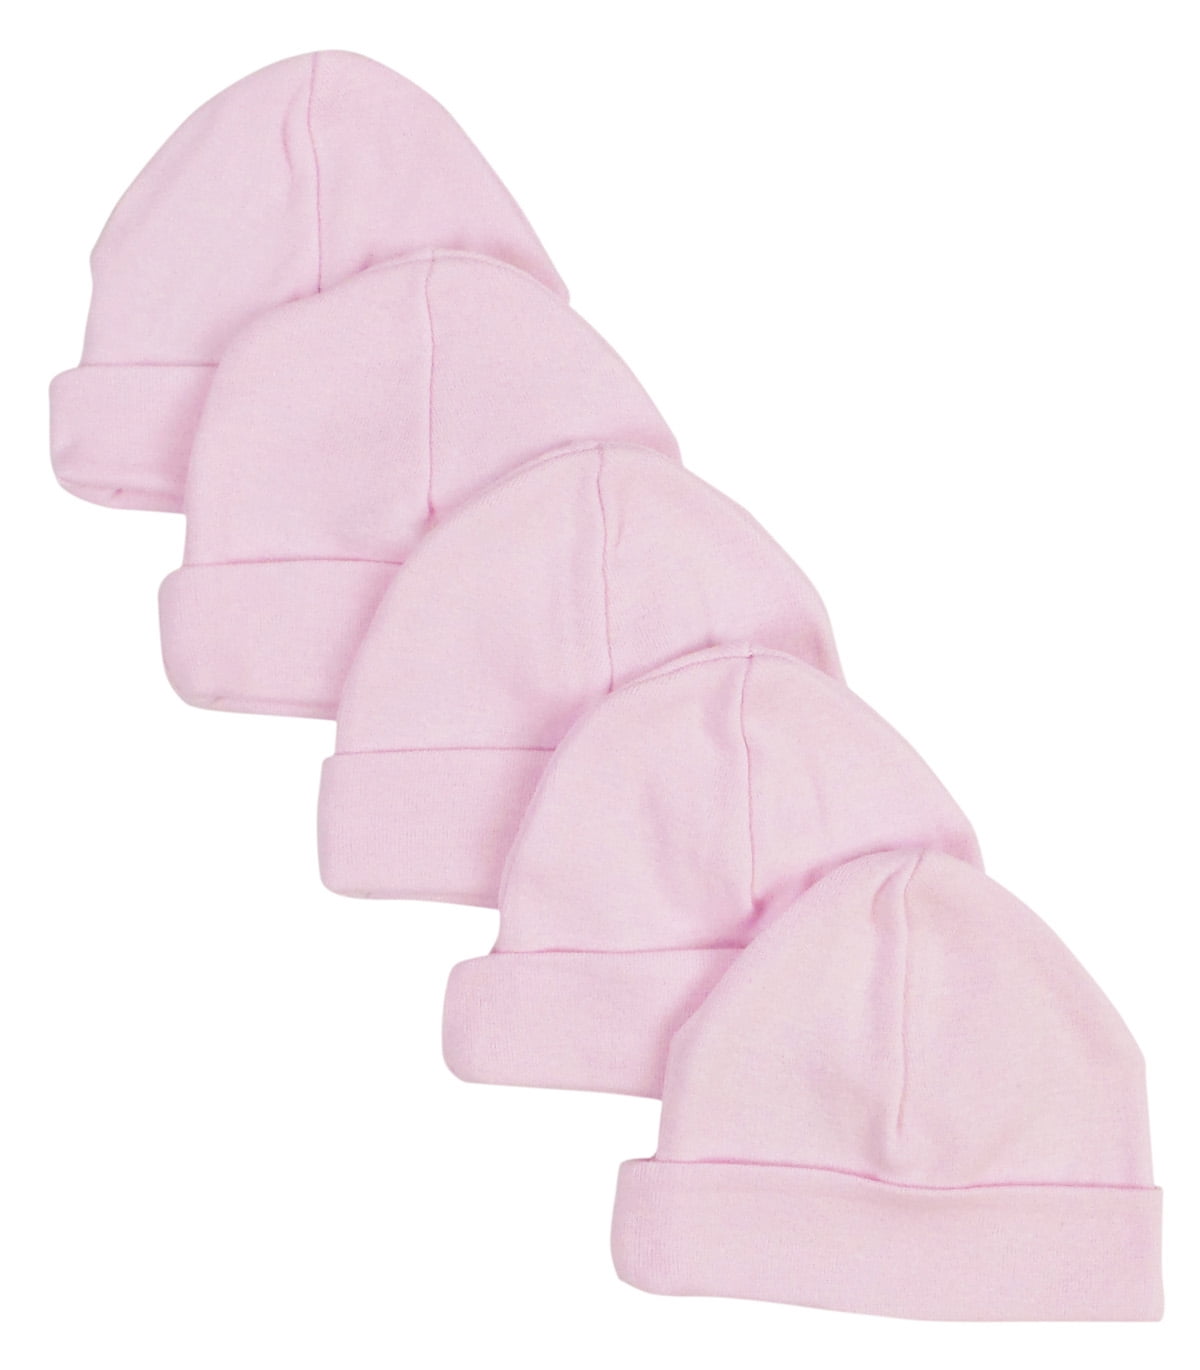 Baby Cap, Pink - Pack Of 5